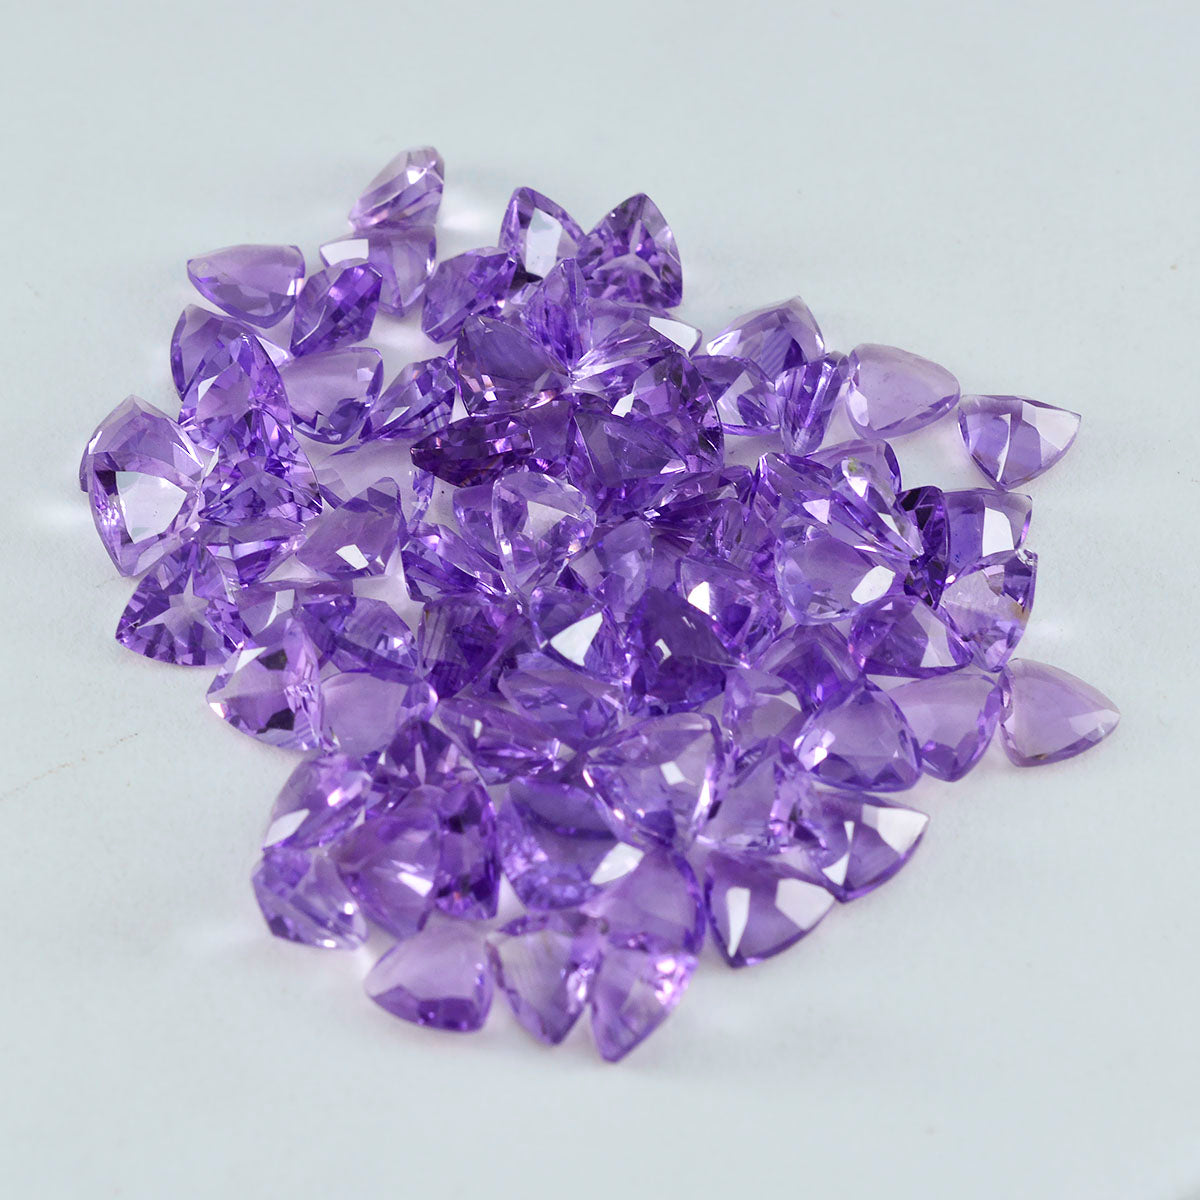 Riyogems 1PC Genuine Purple Amethyst Faceted 7X7 mm Trillion Shape great Quality Loose Gem